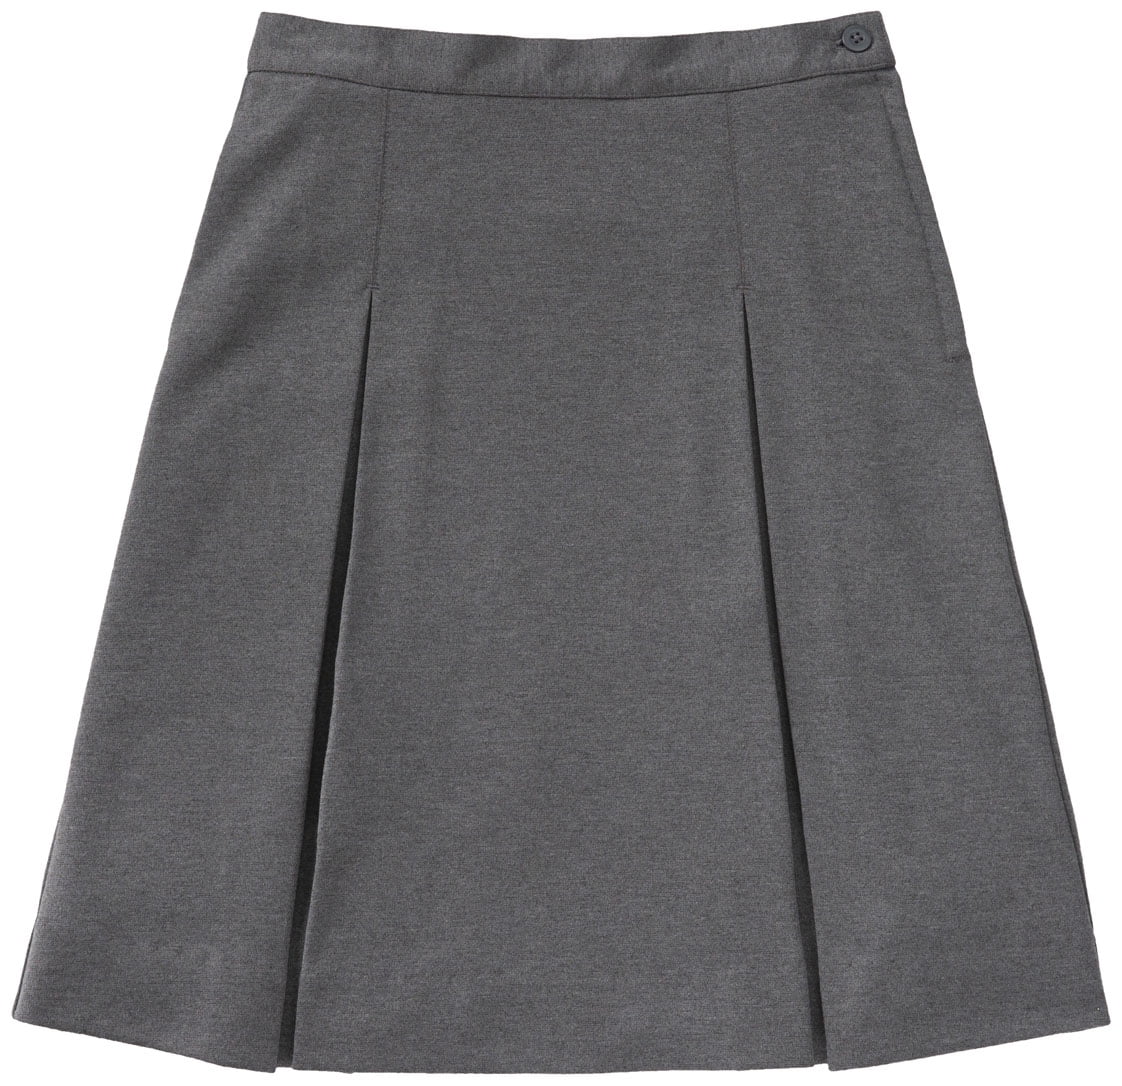 ZECO Girl Dress Knee Length Concealed Back Zip Pencil Skirt School Uniform Wear 